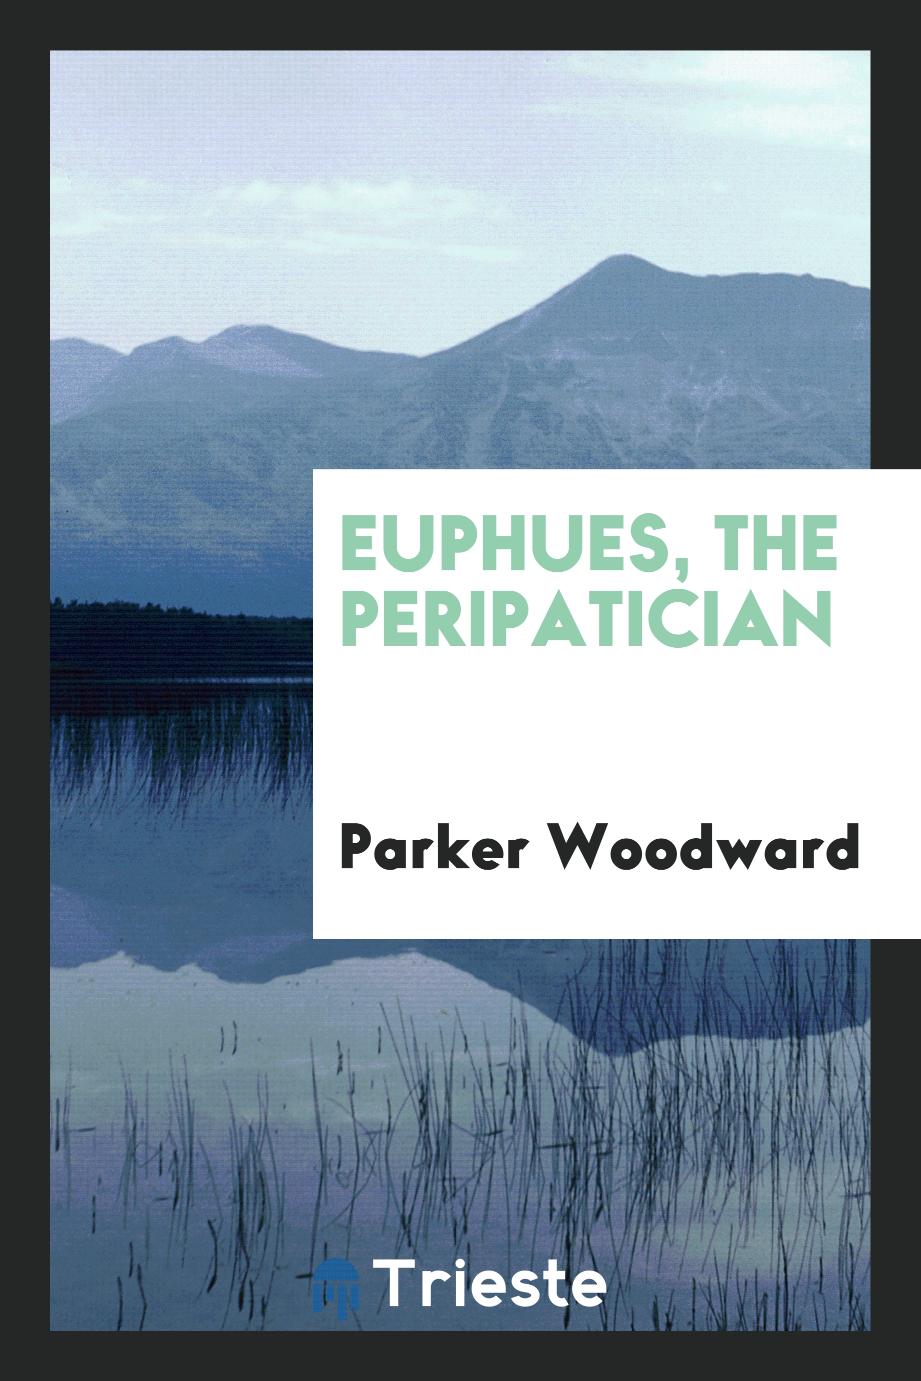 Euphues, the peripatician